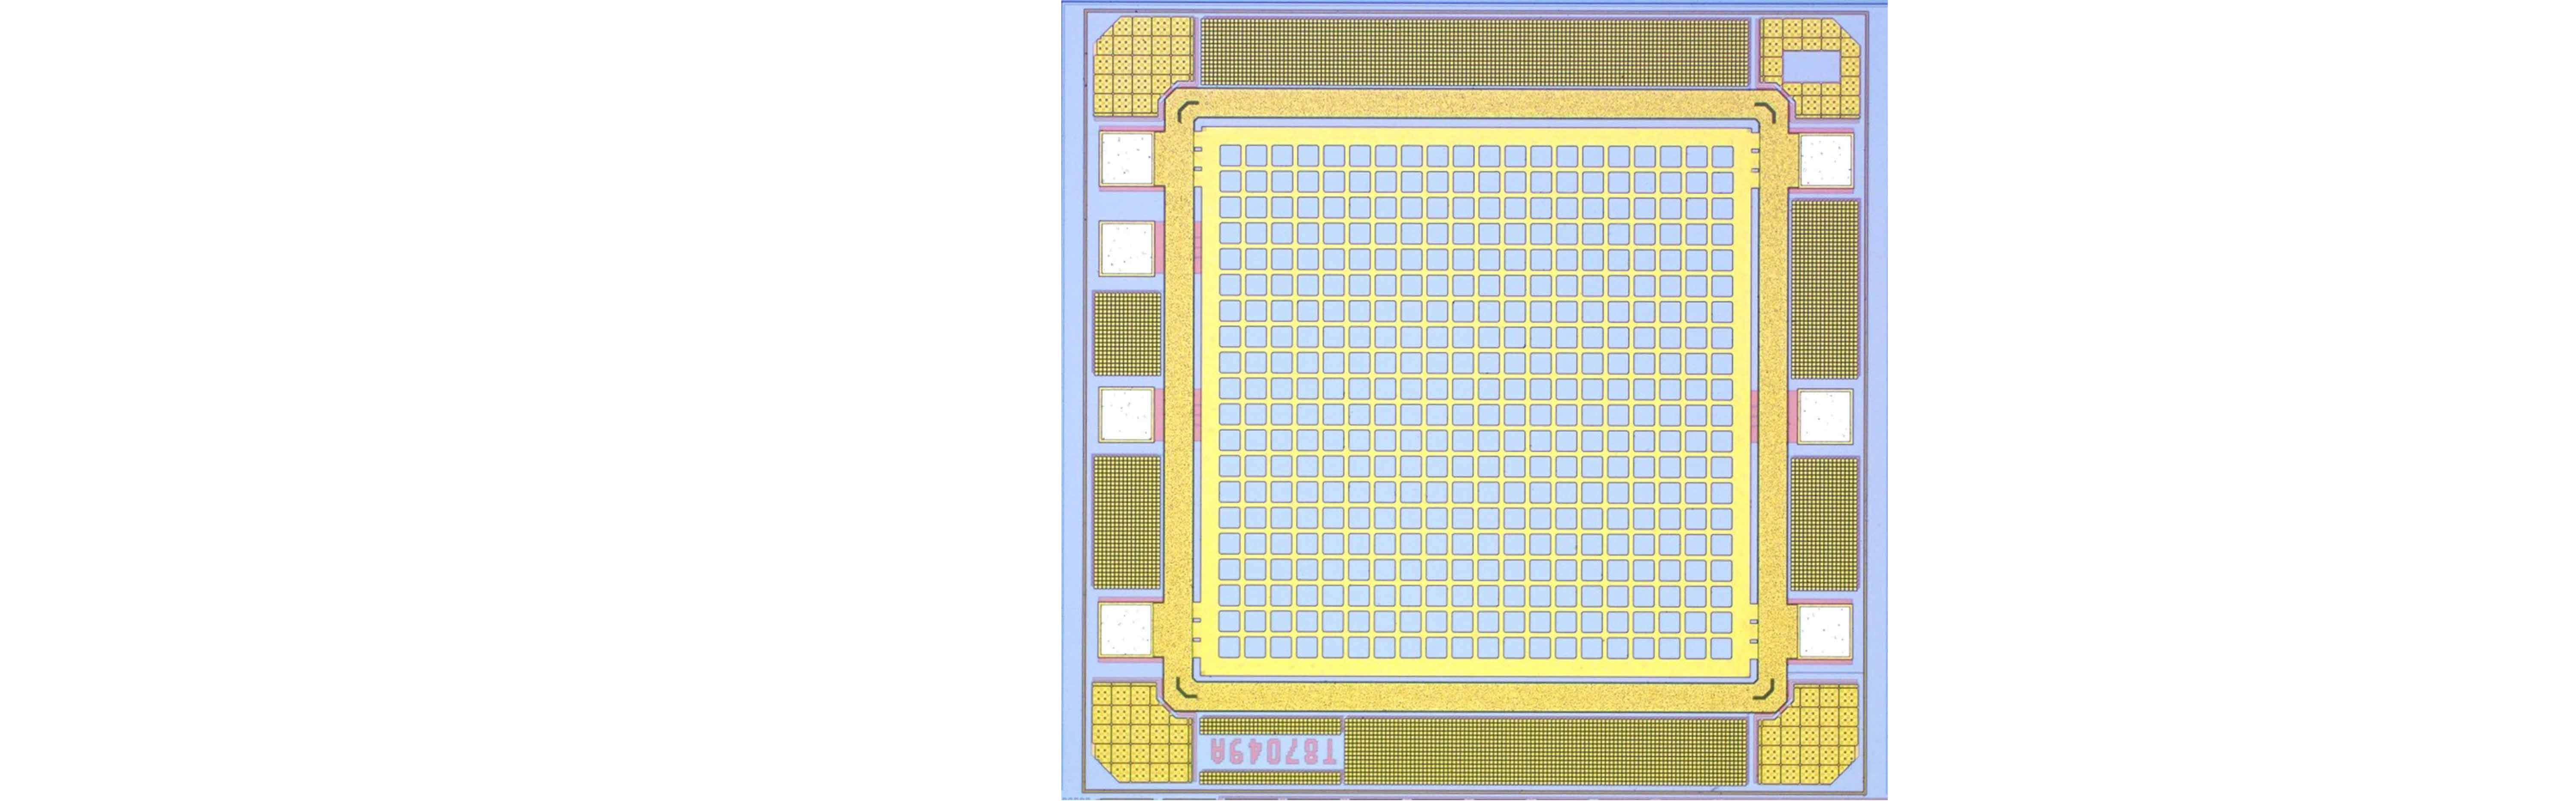 20 x 20 Pixel Analoger Silicon Photomultiplier des Fraunhofer IMS